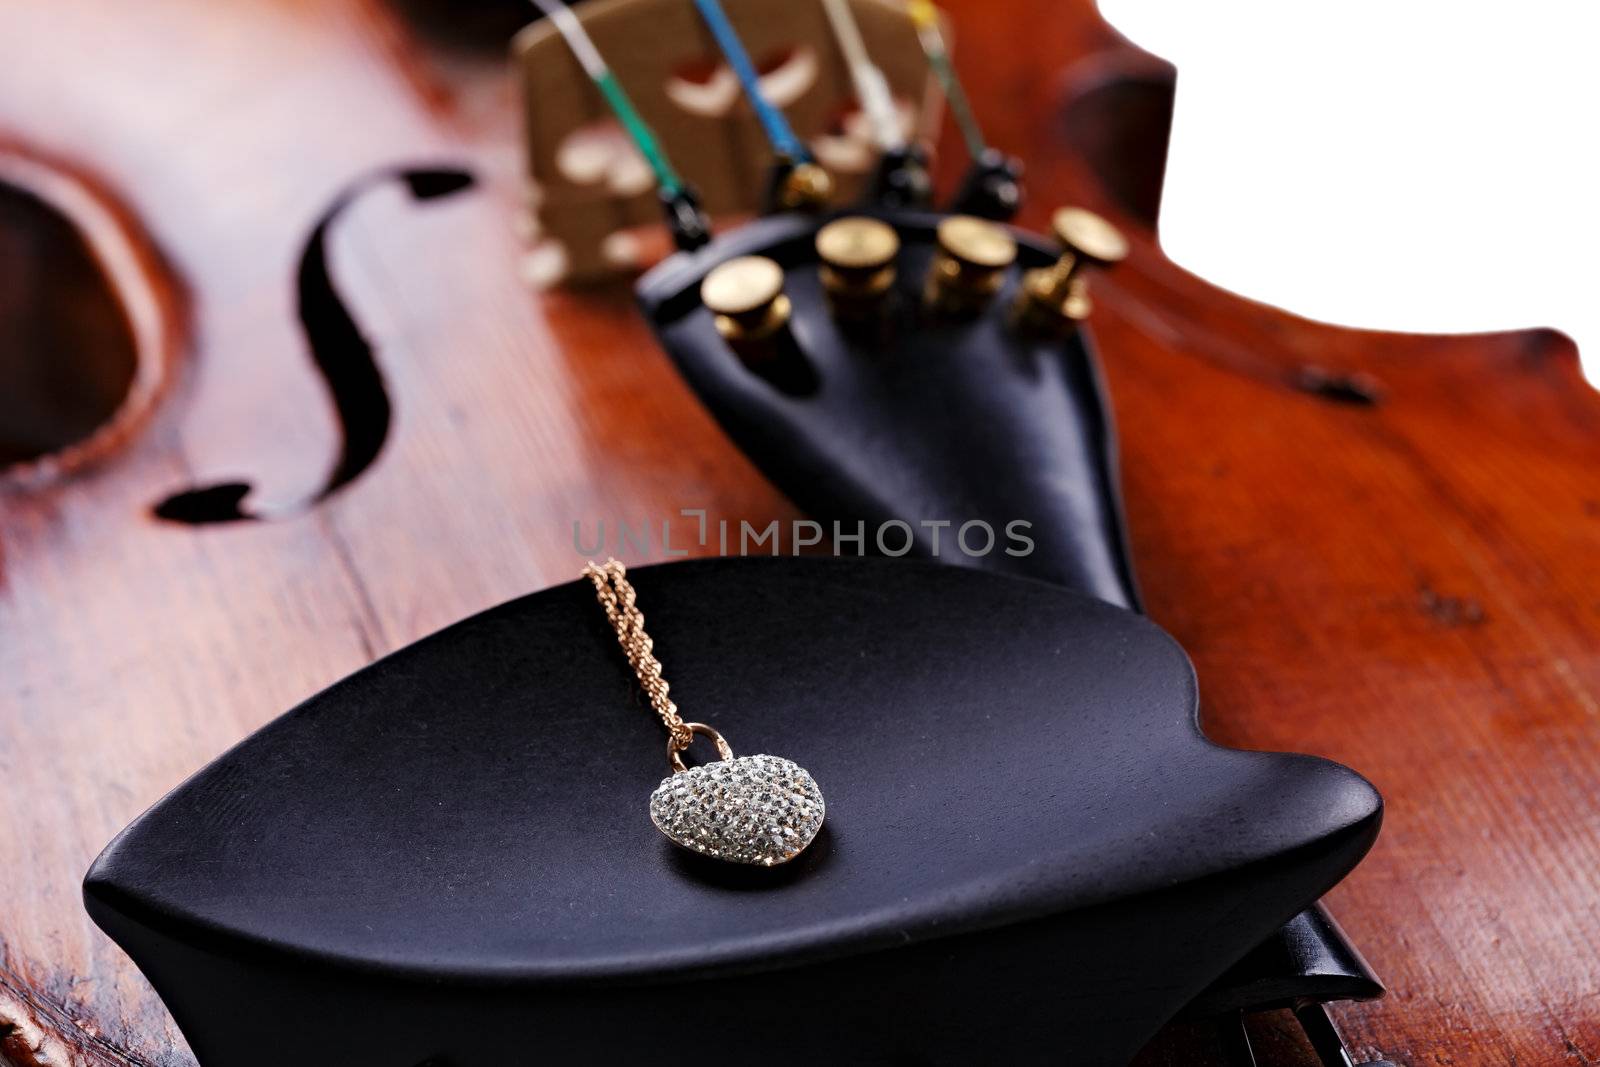 Old Violin with jewel by Roka